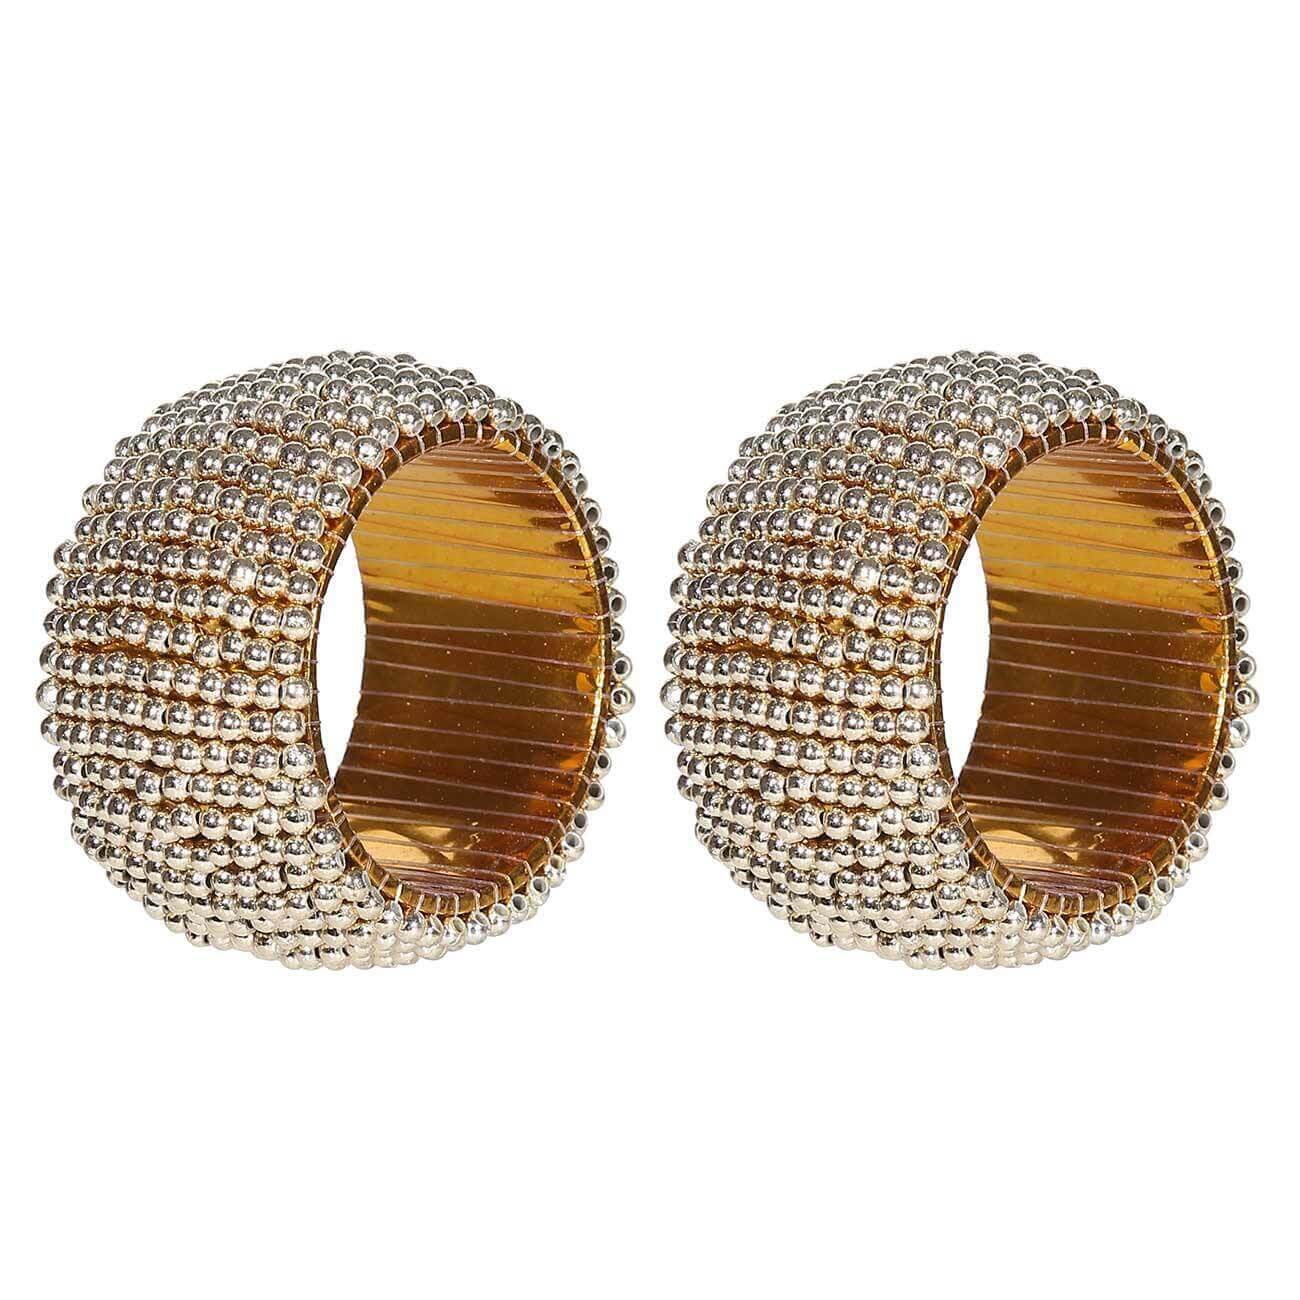 Кольцо для салфеток, 5 см, 2 шт, бисер, круглое, золотистое, Shiny beads бисер чехия preciosa 10 0 5 гр 38040